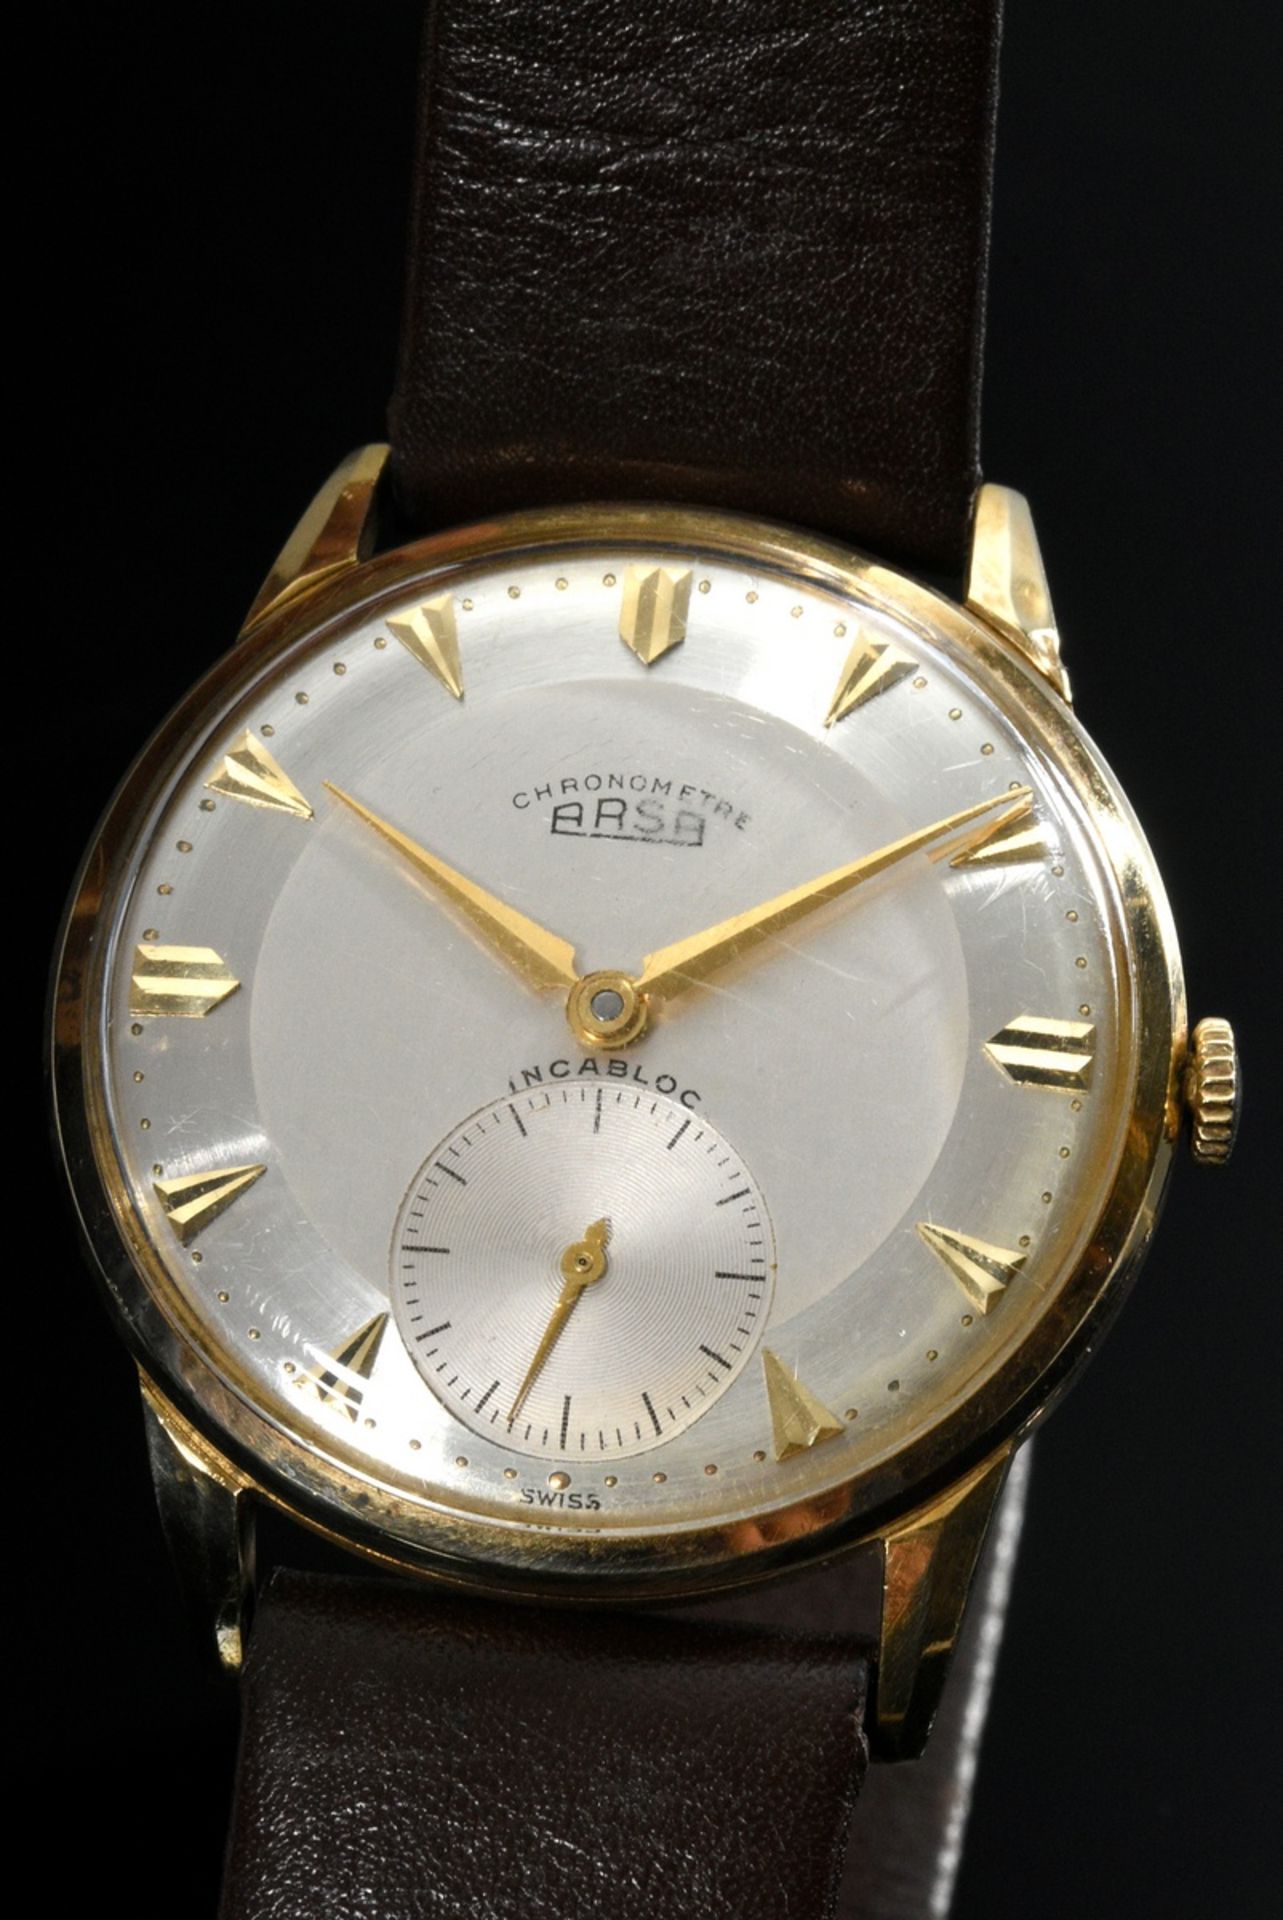 Gelbgold 750 Arsa Chronometer Armbanduhr, Handaufzug, kleine Sekunde, Pfeilindizes, braunes Lederba - Bild 4 aus 4